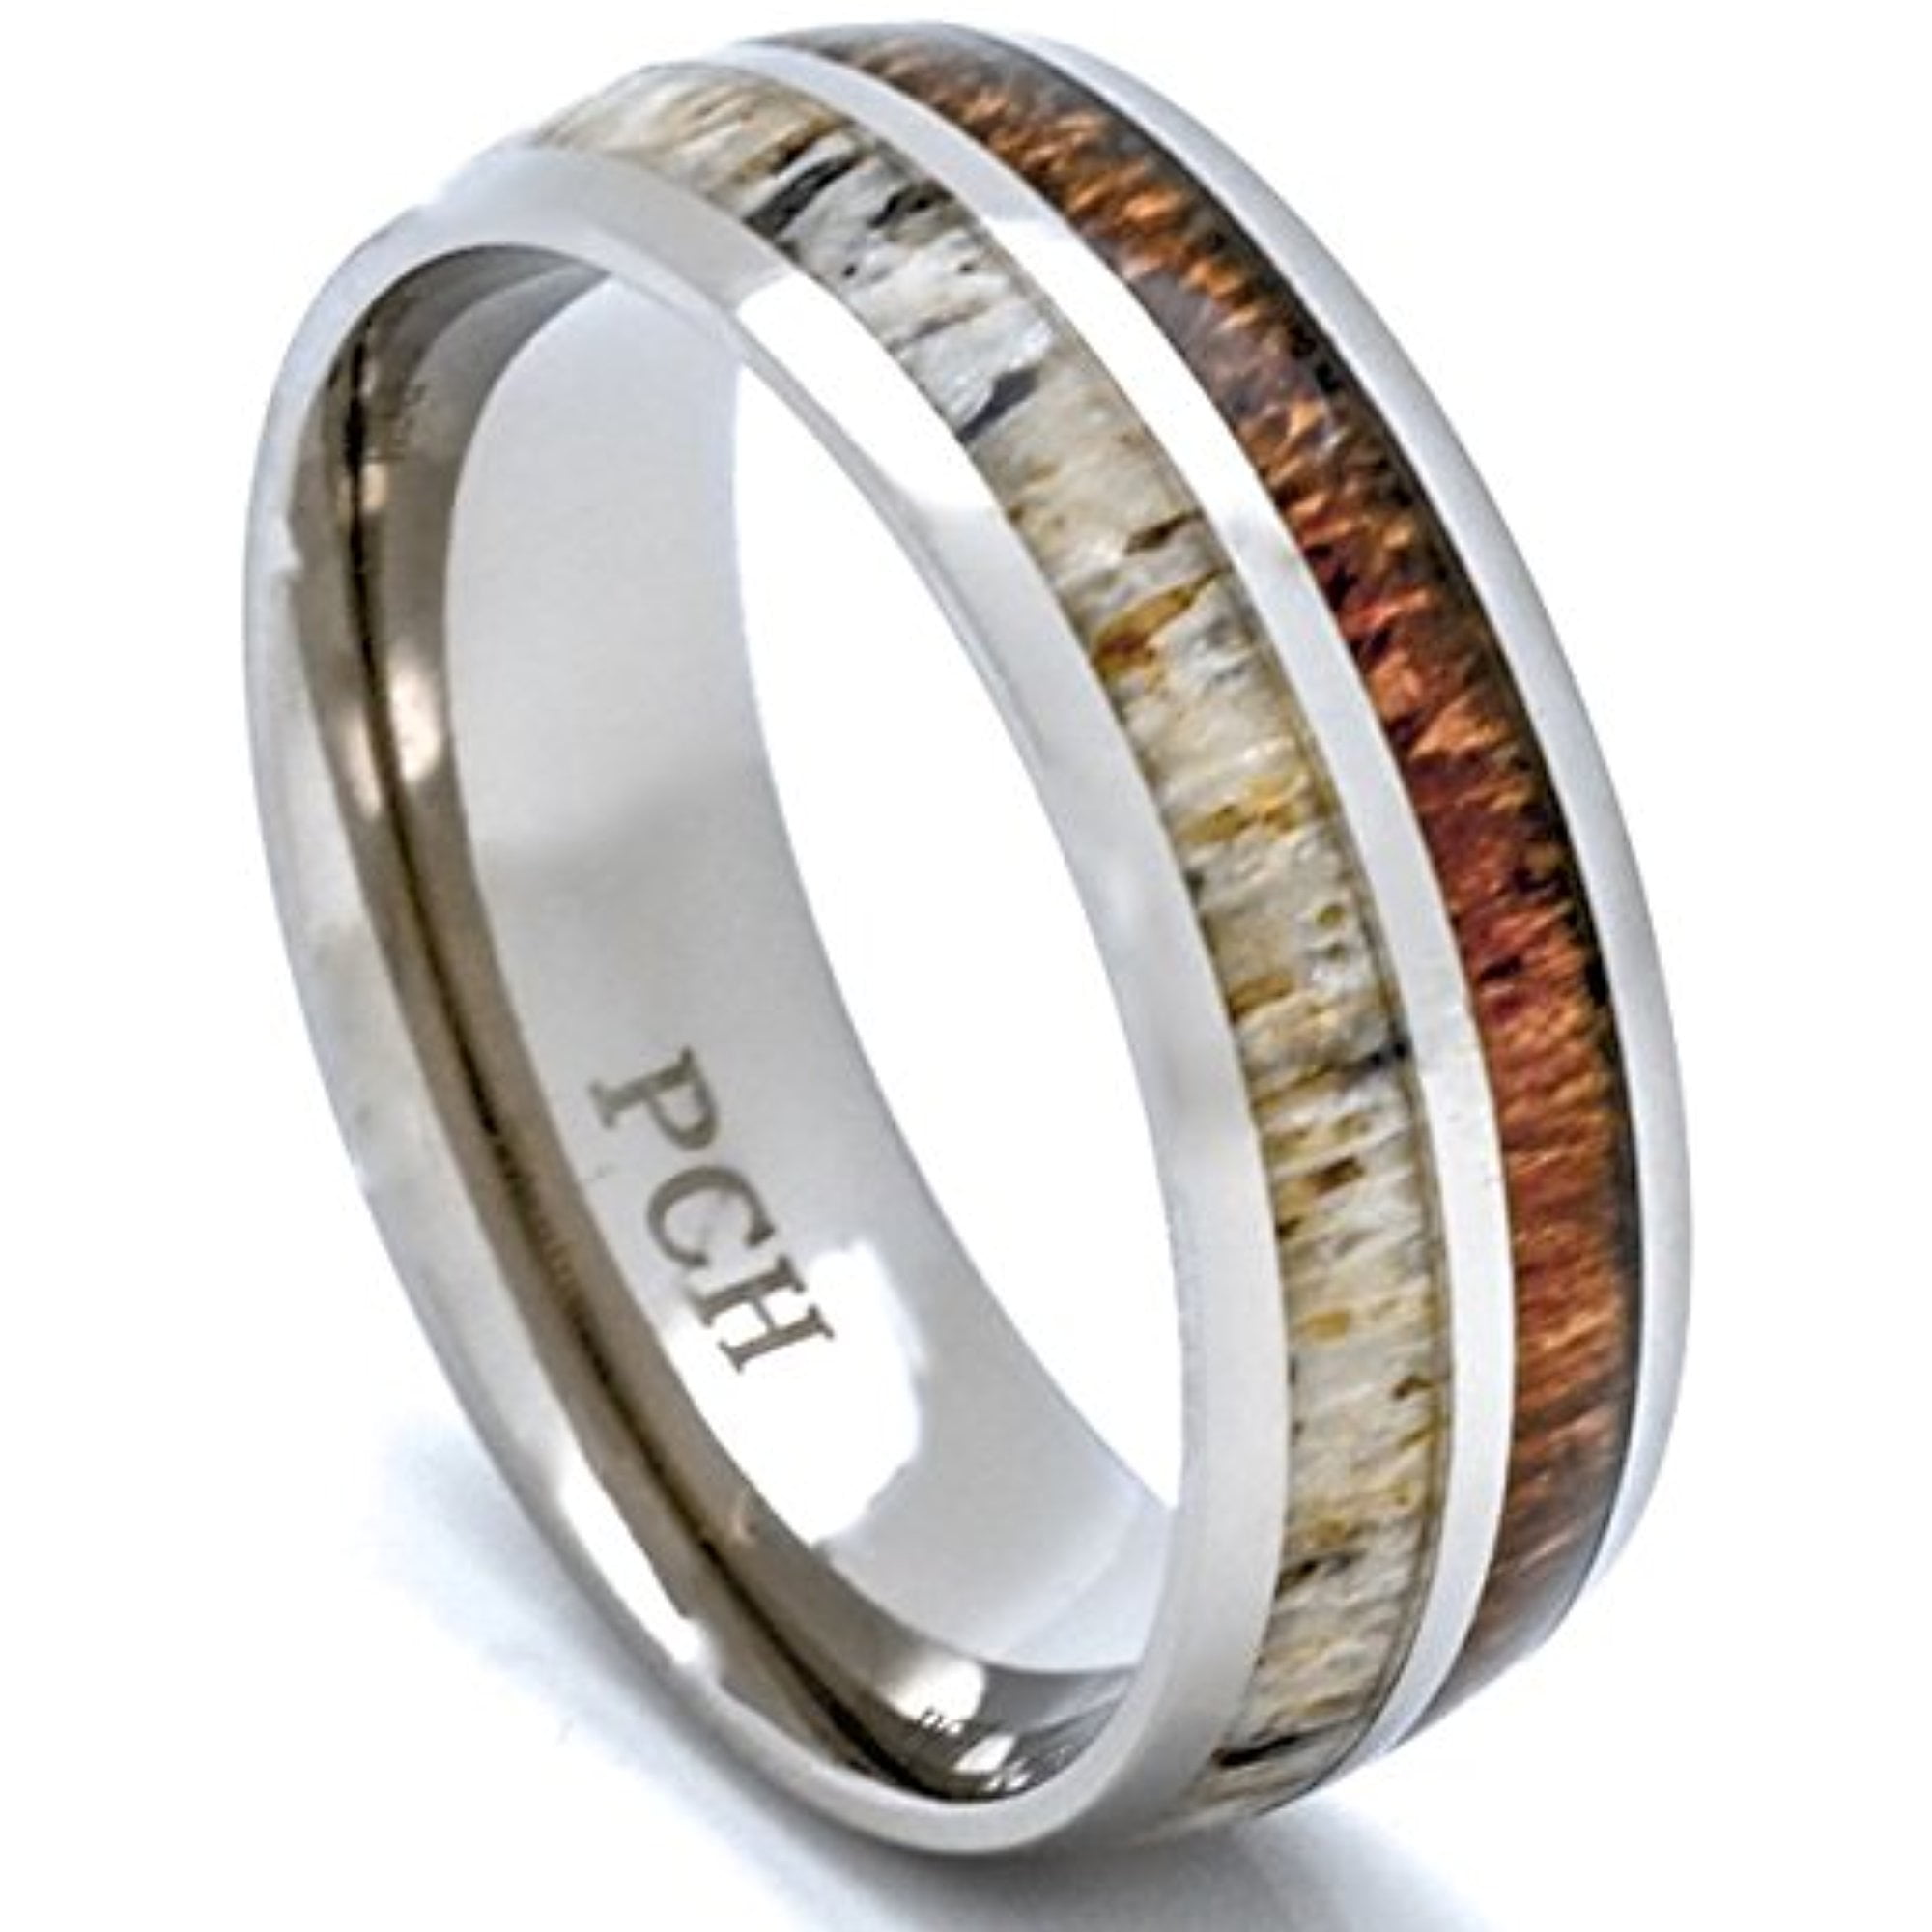 HIJONES Unisex Stainless Steel Rings Koa Real Wood Wedding Engagement Ring Band High Polished Finish